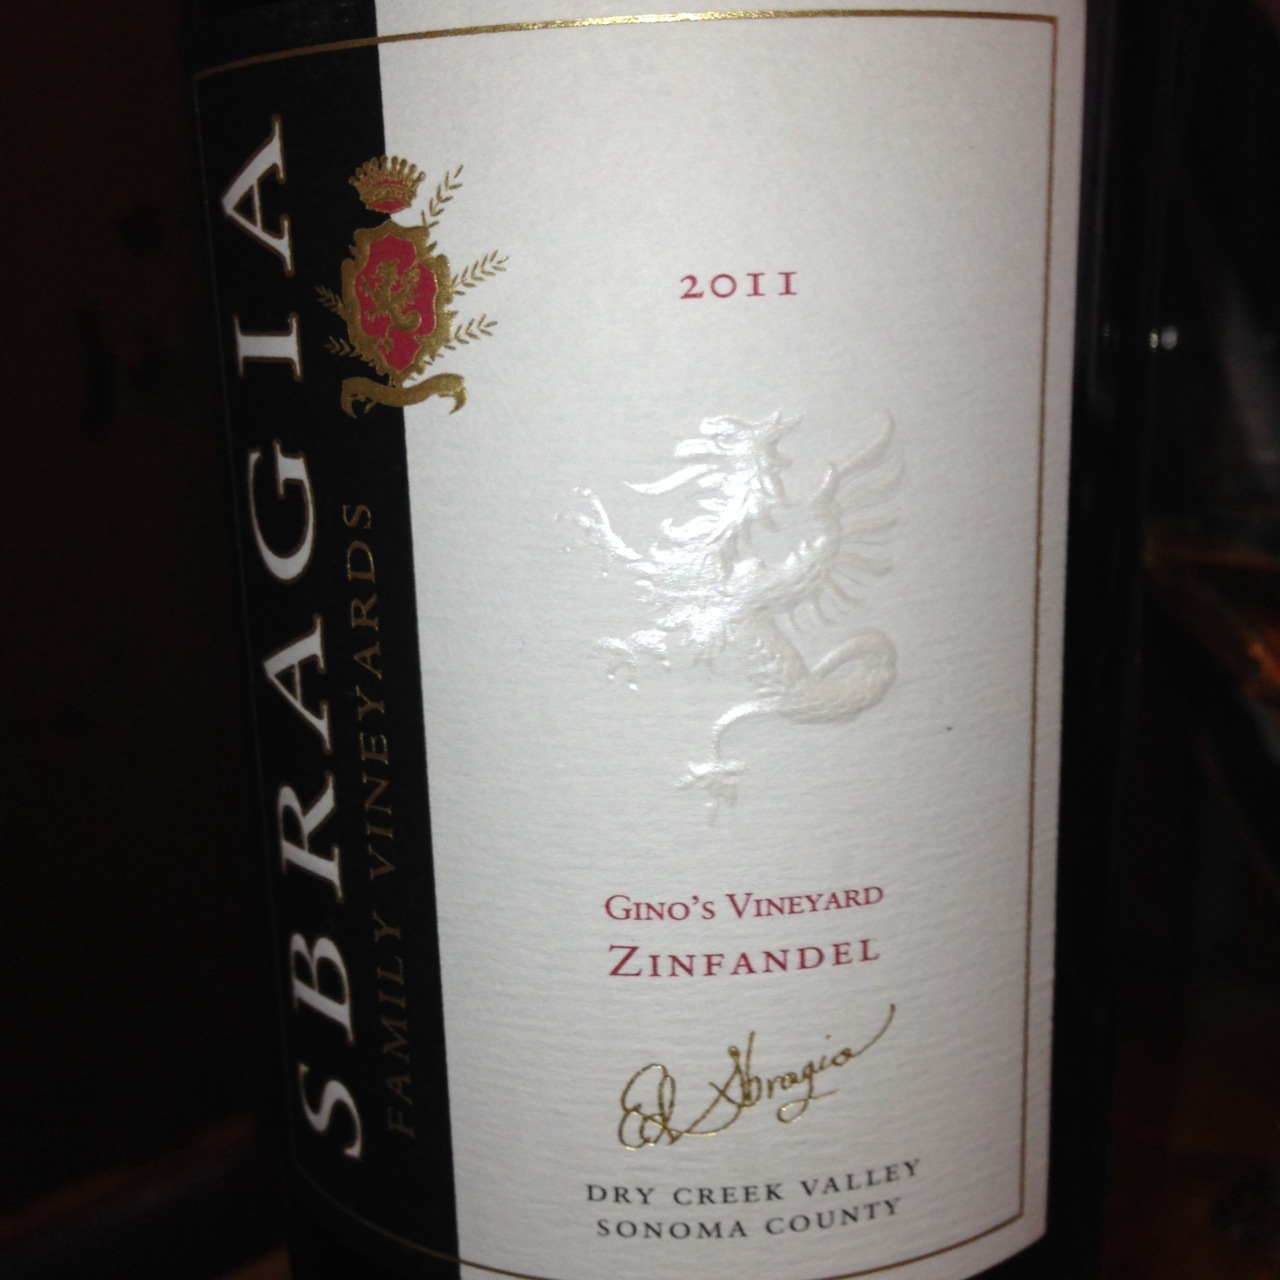 2012 Sbragia Zinfandel Gino's Vineyard Dry Creek - click image for full description